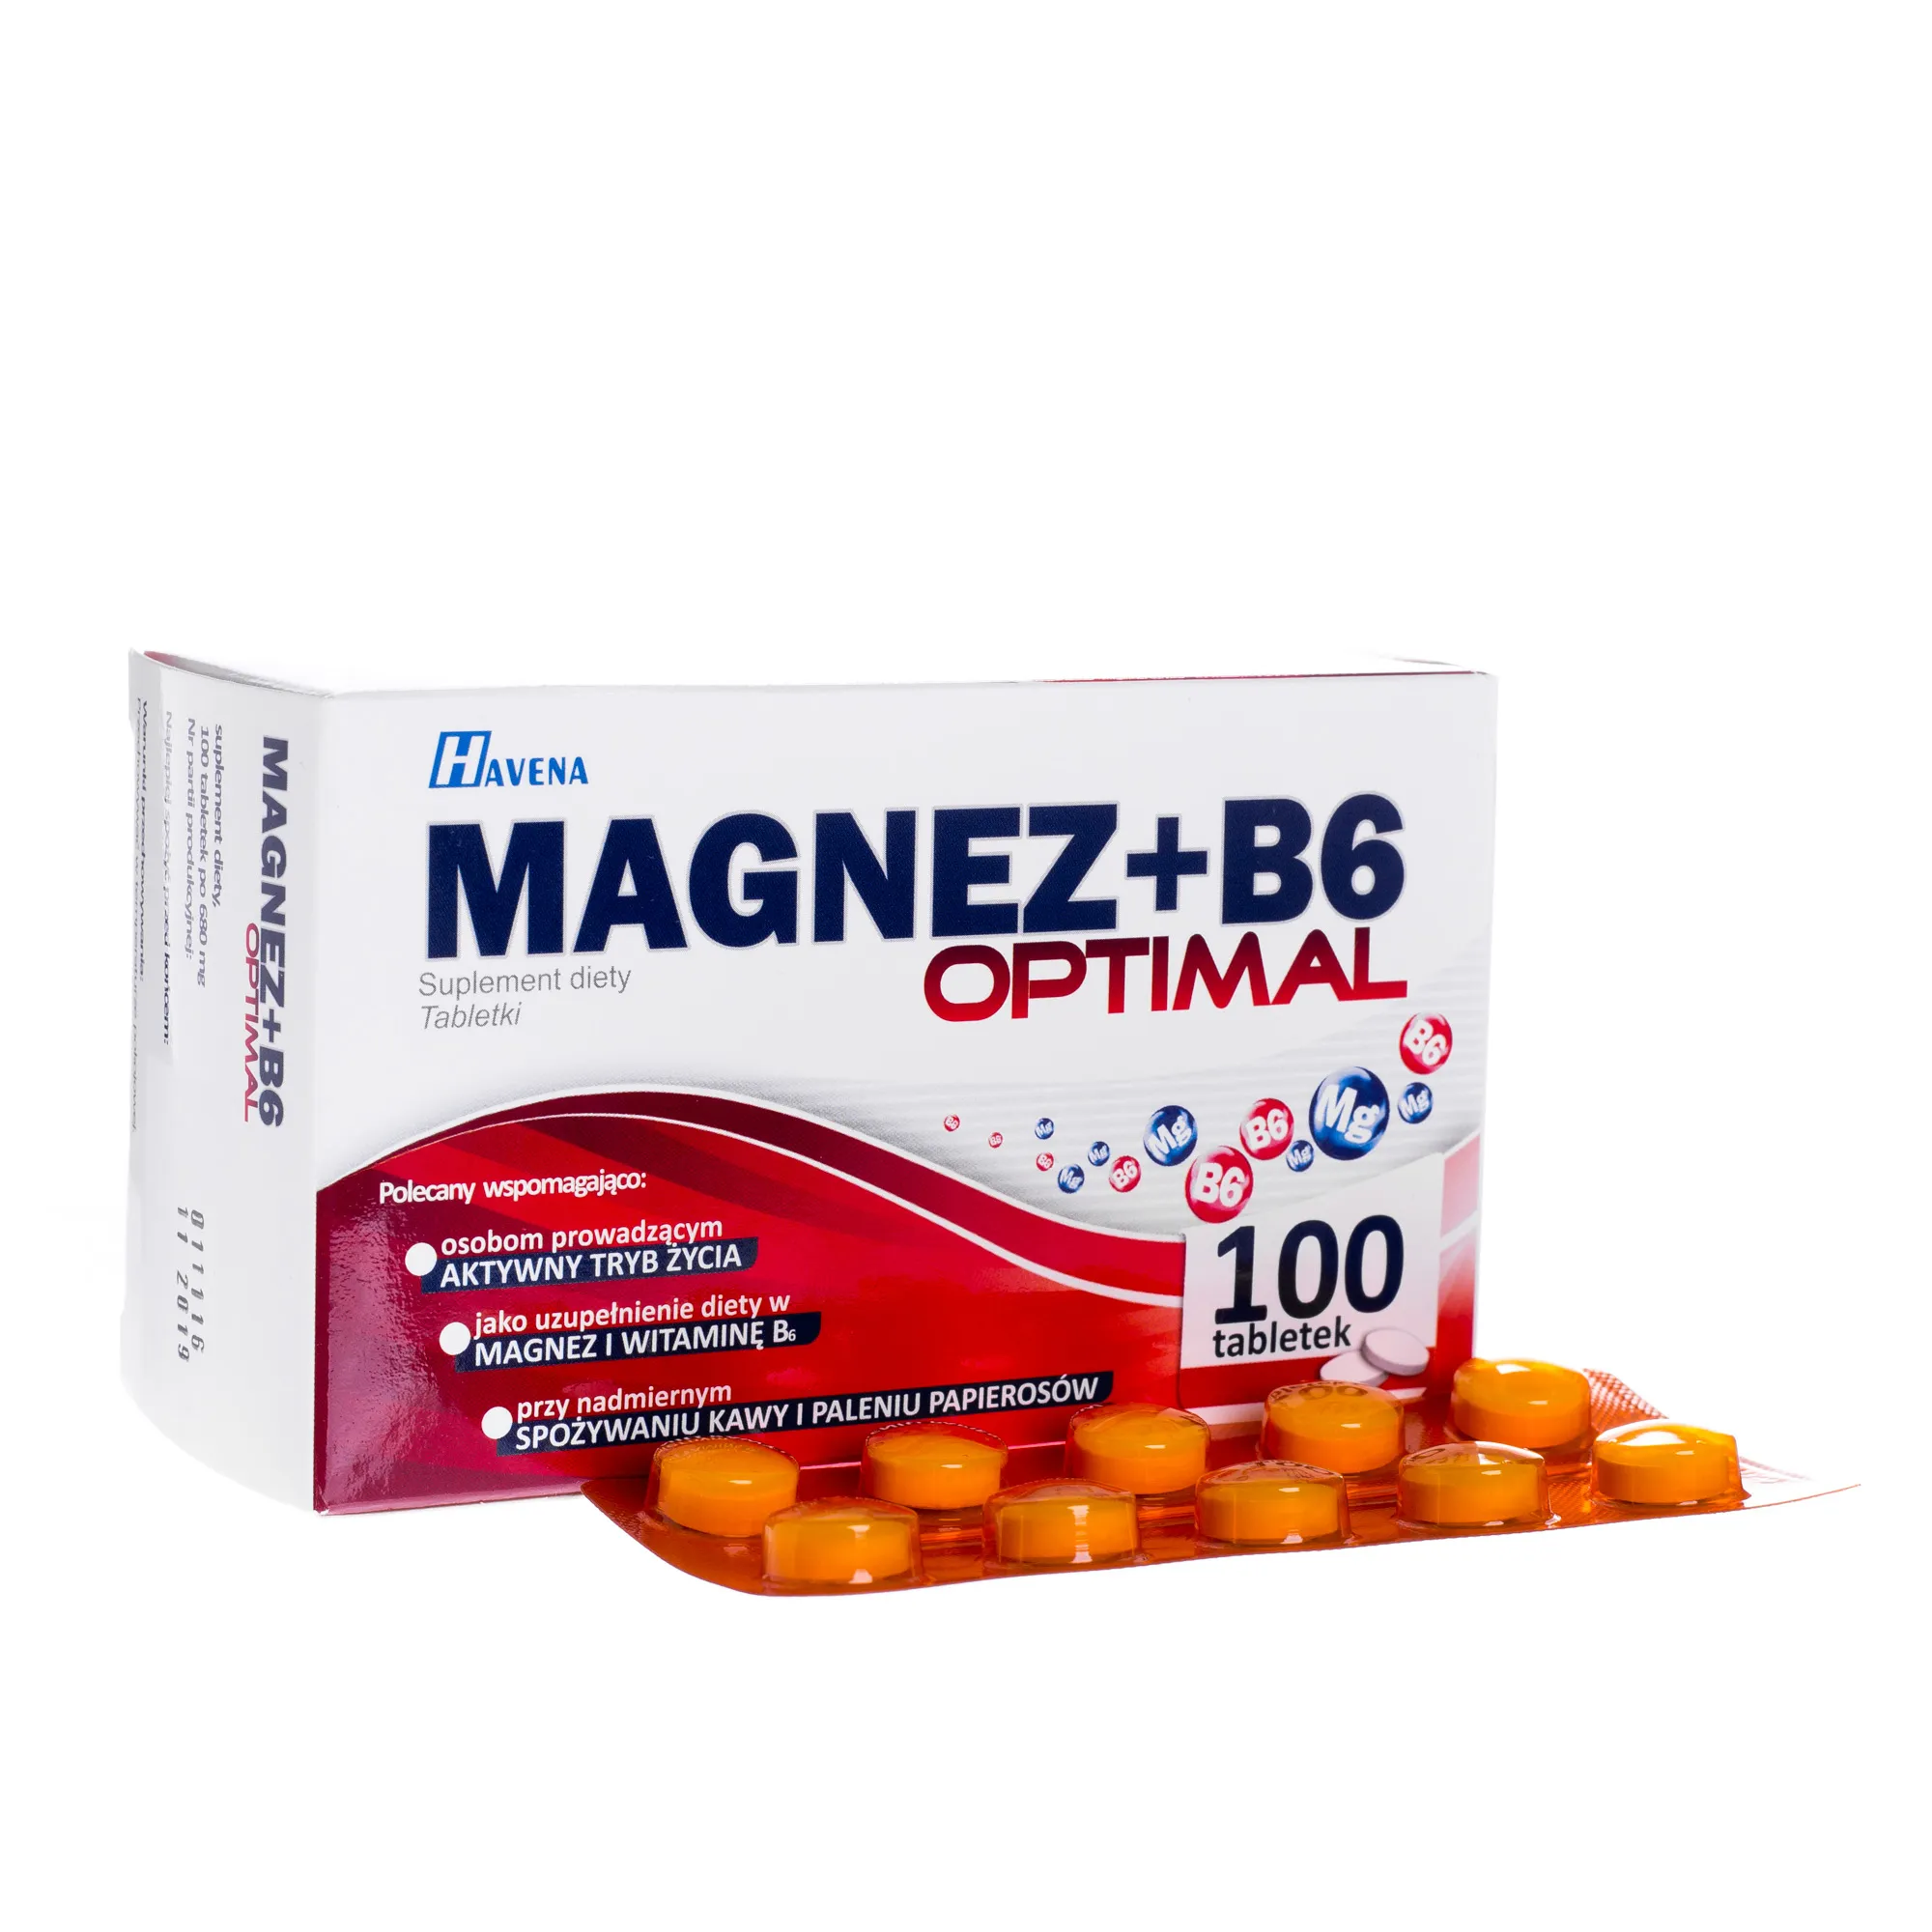 Magnez + B6 Optimal. 100 tabletek